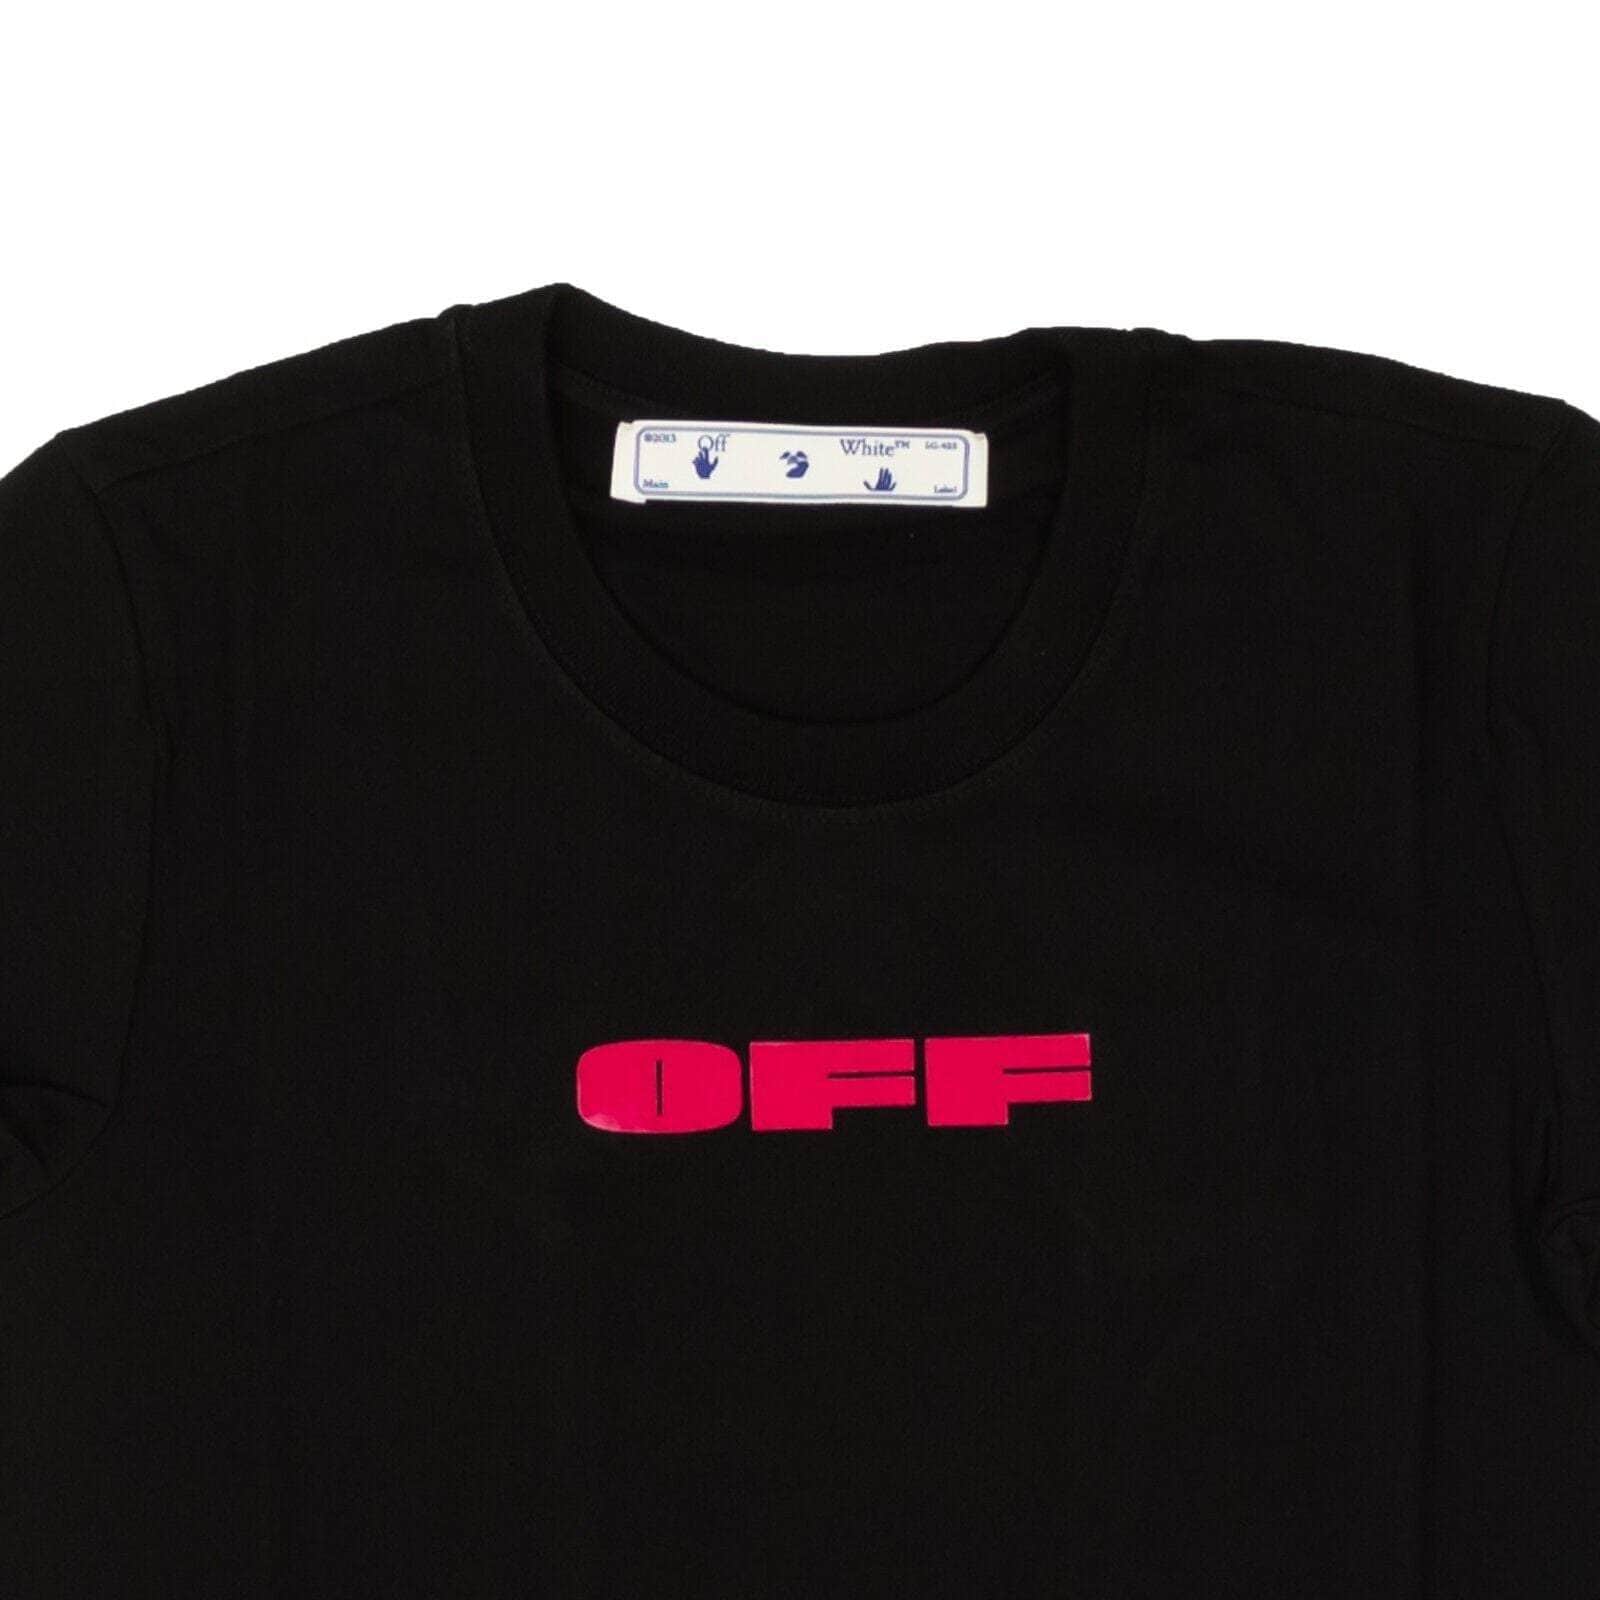 Off-white C/o Virgil Abloh T-shirts